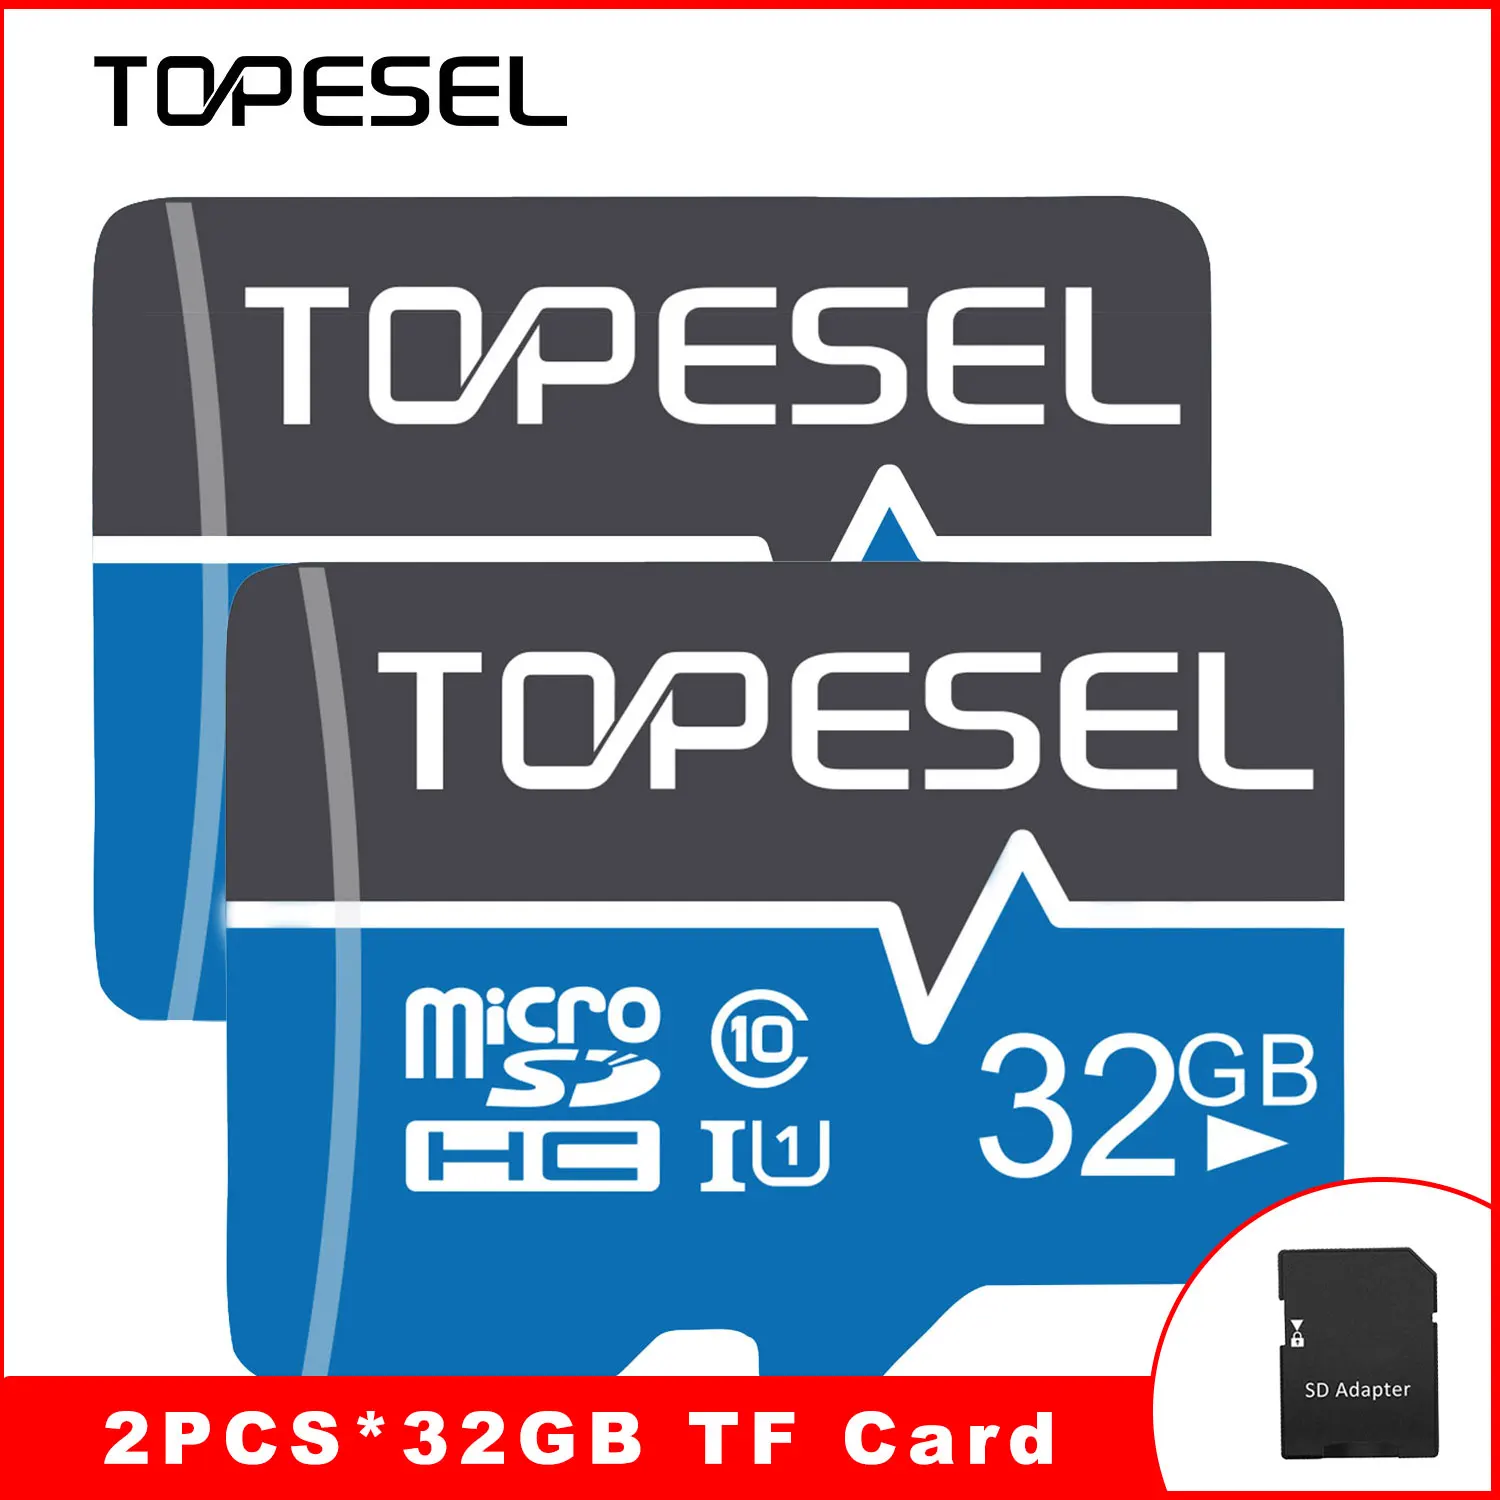 TOPESEL 2PCS 32GB SD Memory Card U1 Class 10 Microsd Cards 3PCS 5PCS 10PCS TF Card Mini MicroSD For Dash Cam Smartphone Camera